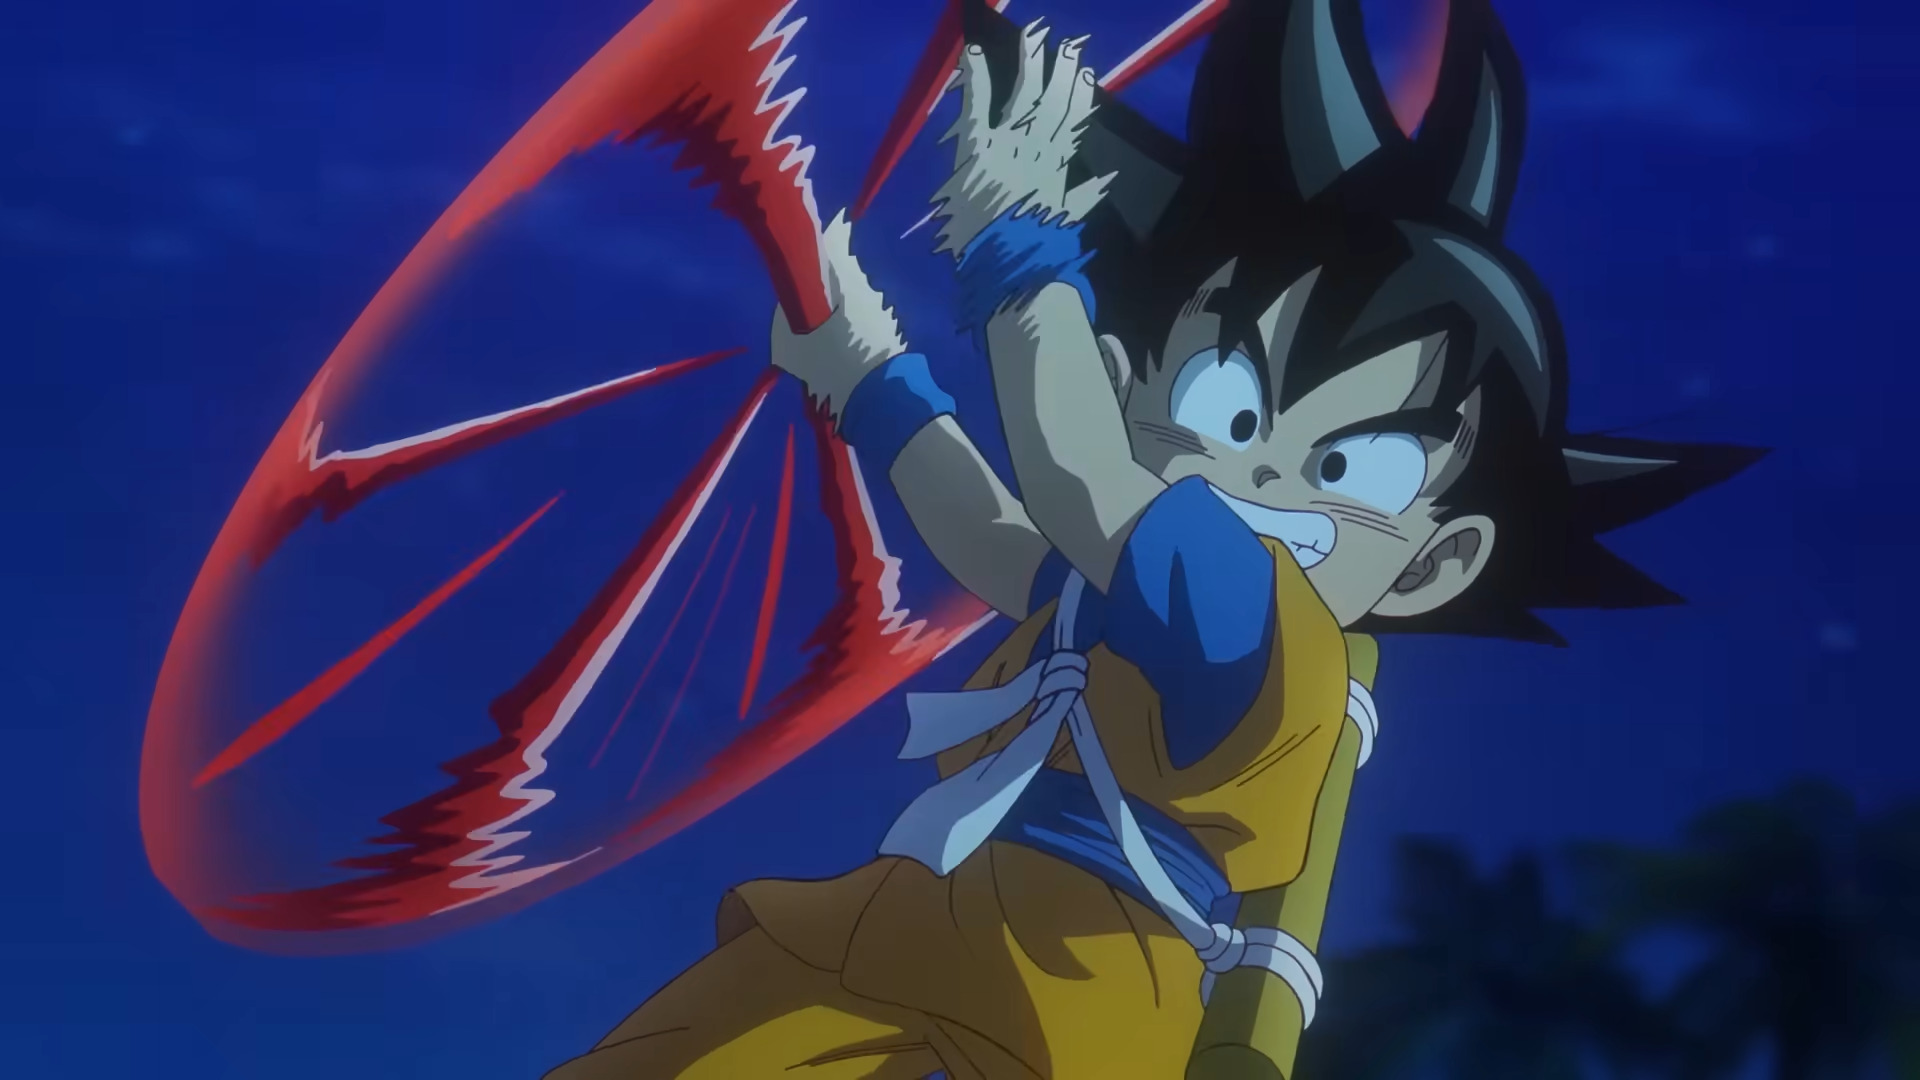 Dragon Ball Daima: entenda o nome do novo anime com Goku